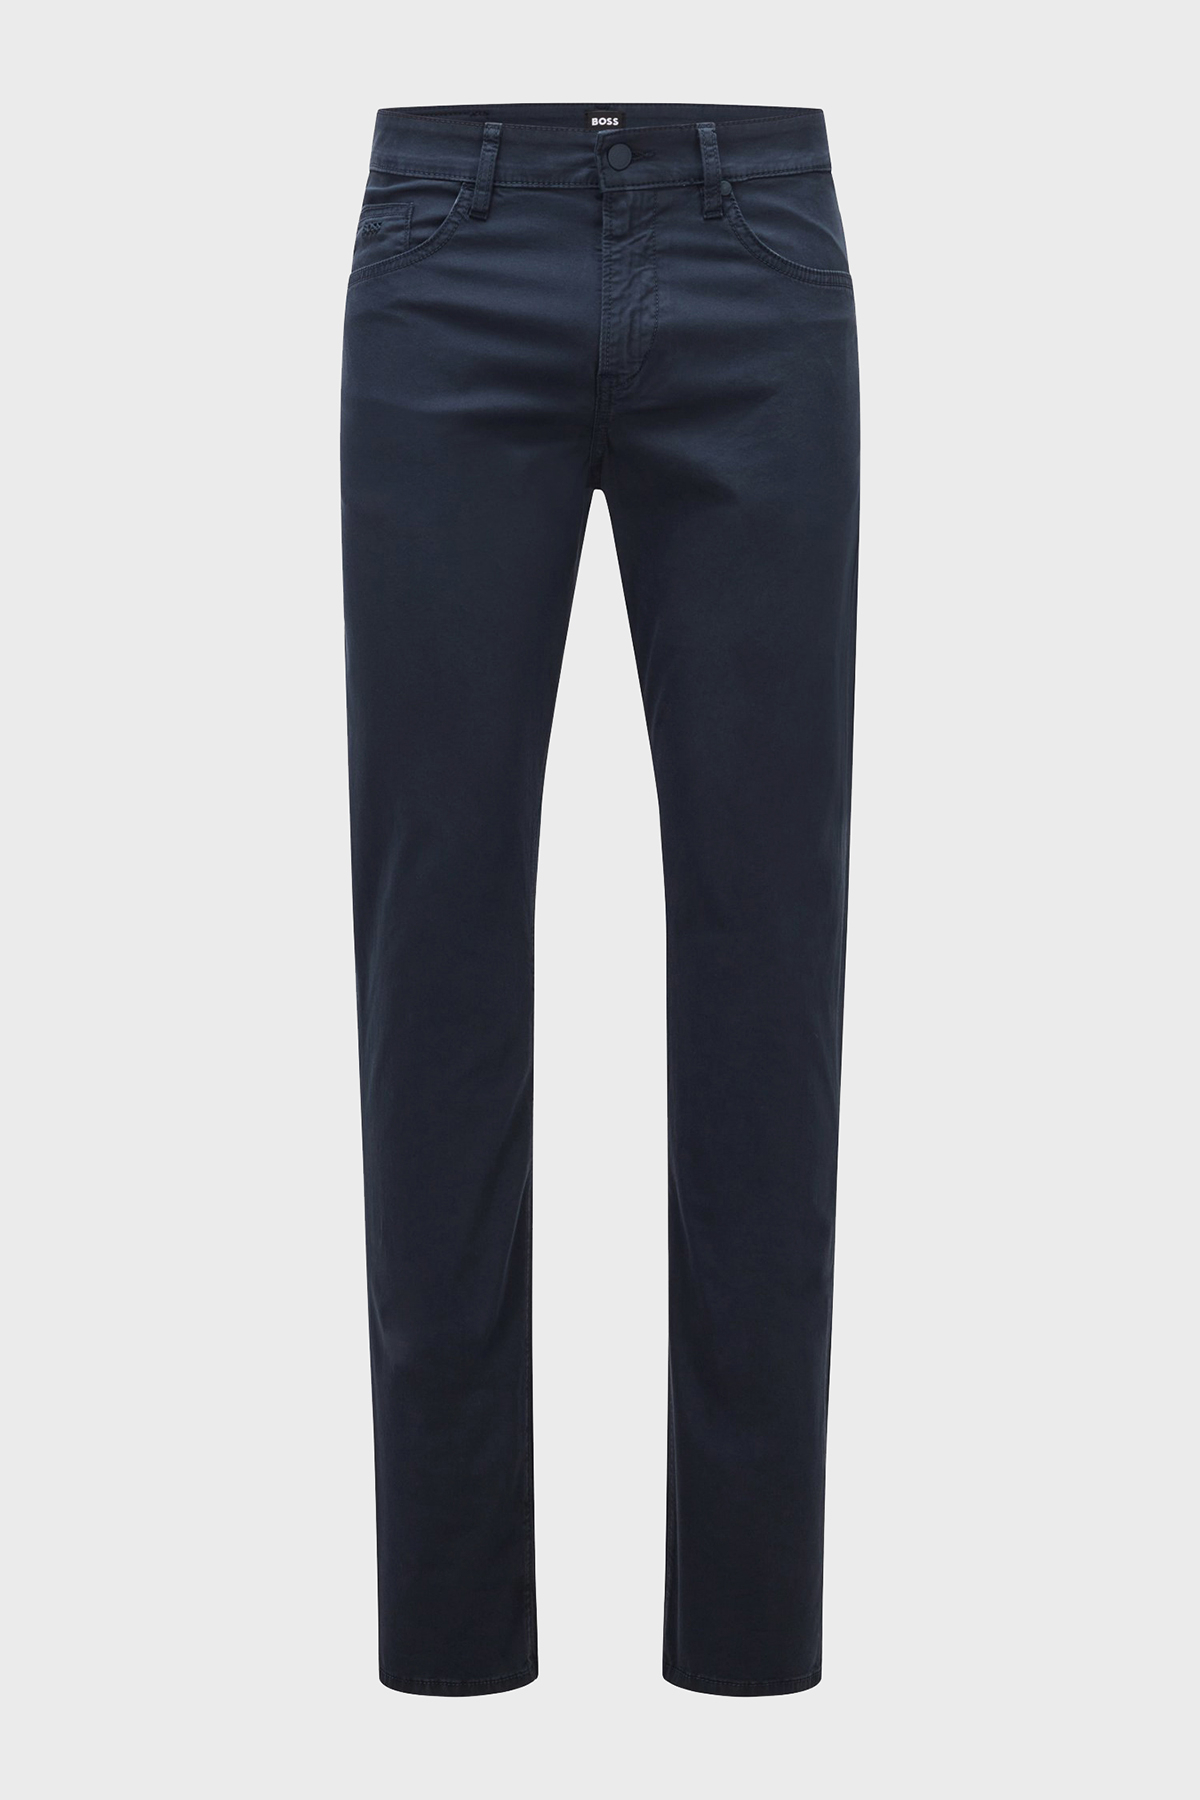 Boss Pamuklu Slim Fit Normal Bel Düz Paça Jeans Erkek Kot Pantolon 50449504 404 LACİVERT